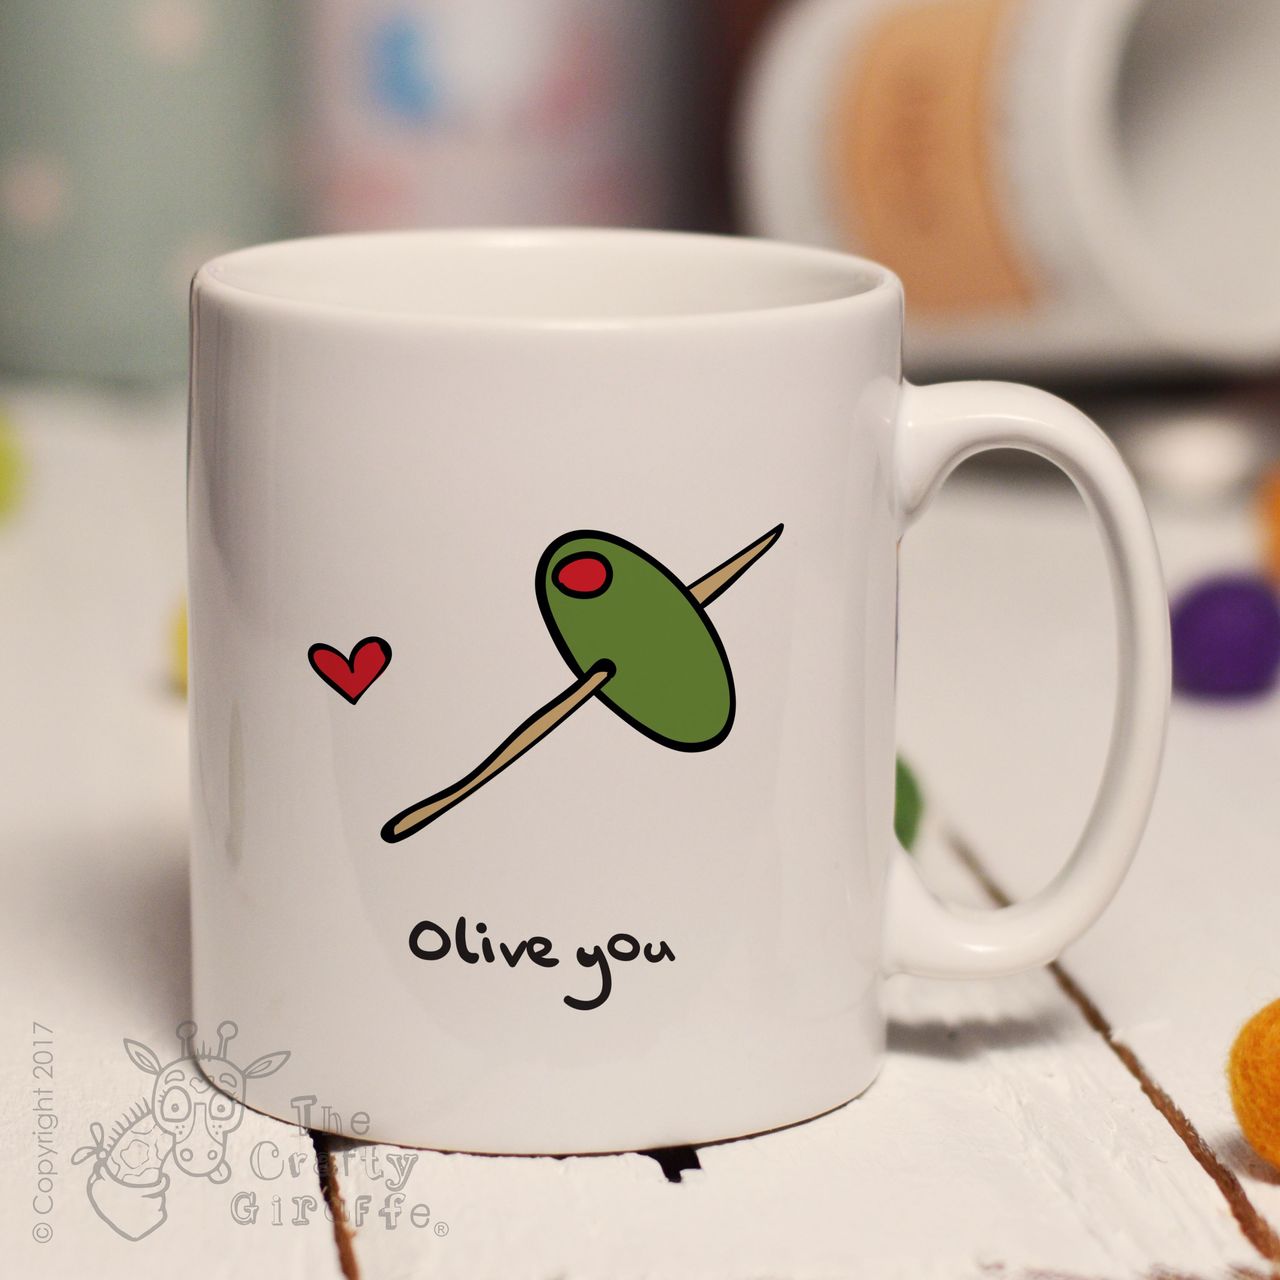 Olive you mug